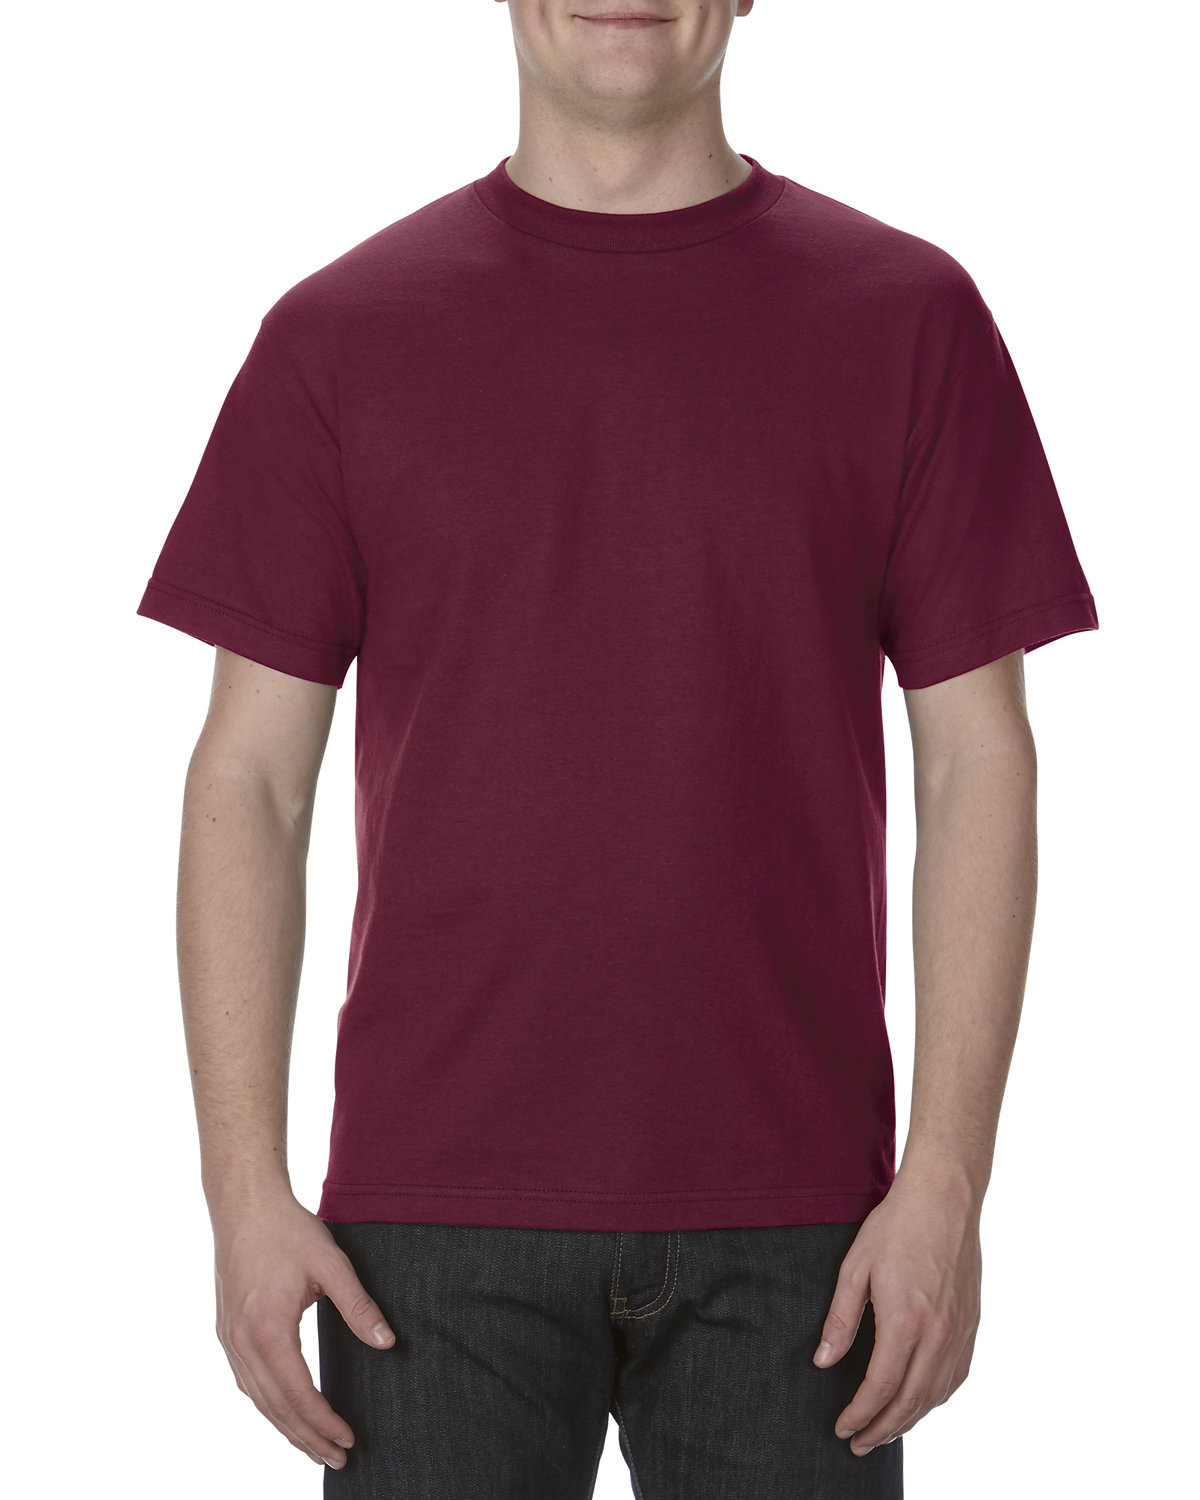 American Apparel Unisex Heavyweight Cotton T-Shirt burgundy 